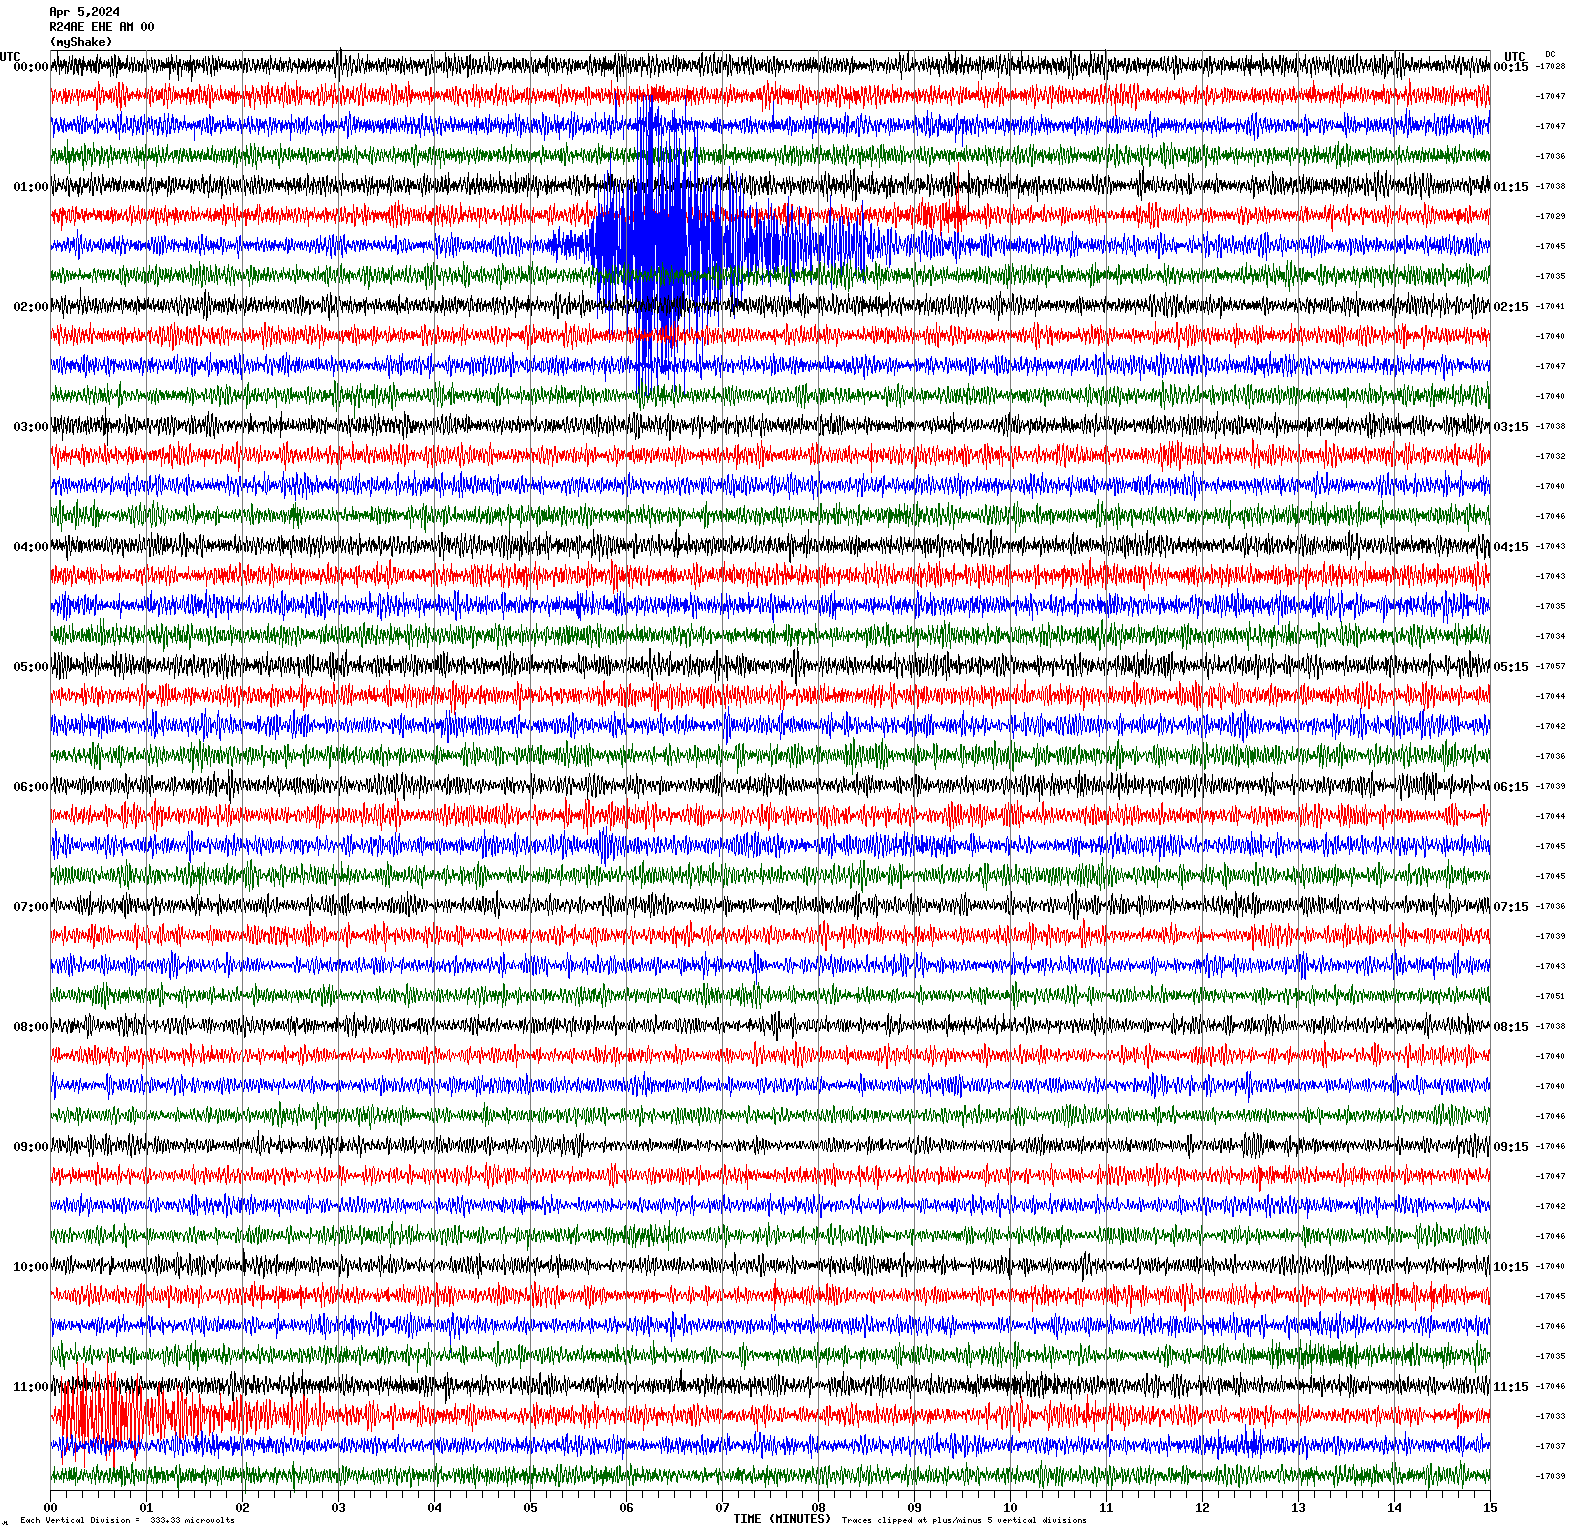 /seismic-data/R24AE/R24AE_EHE_AM_00.2024040500.gif